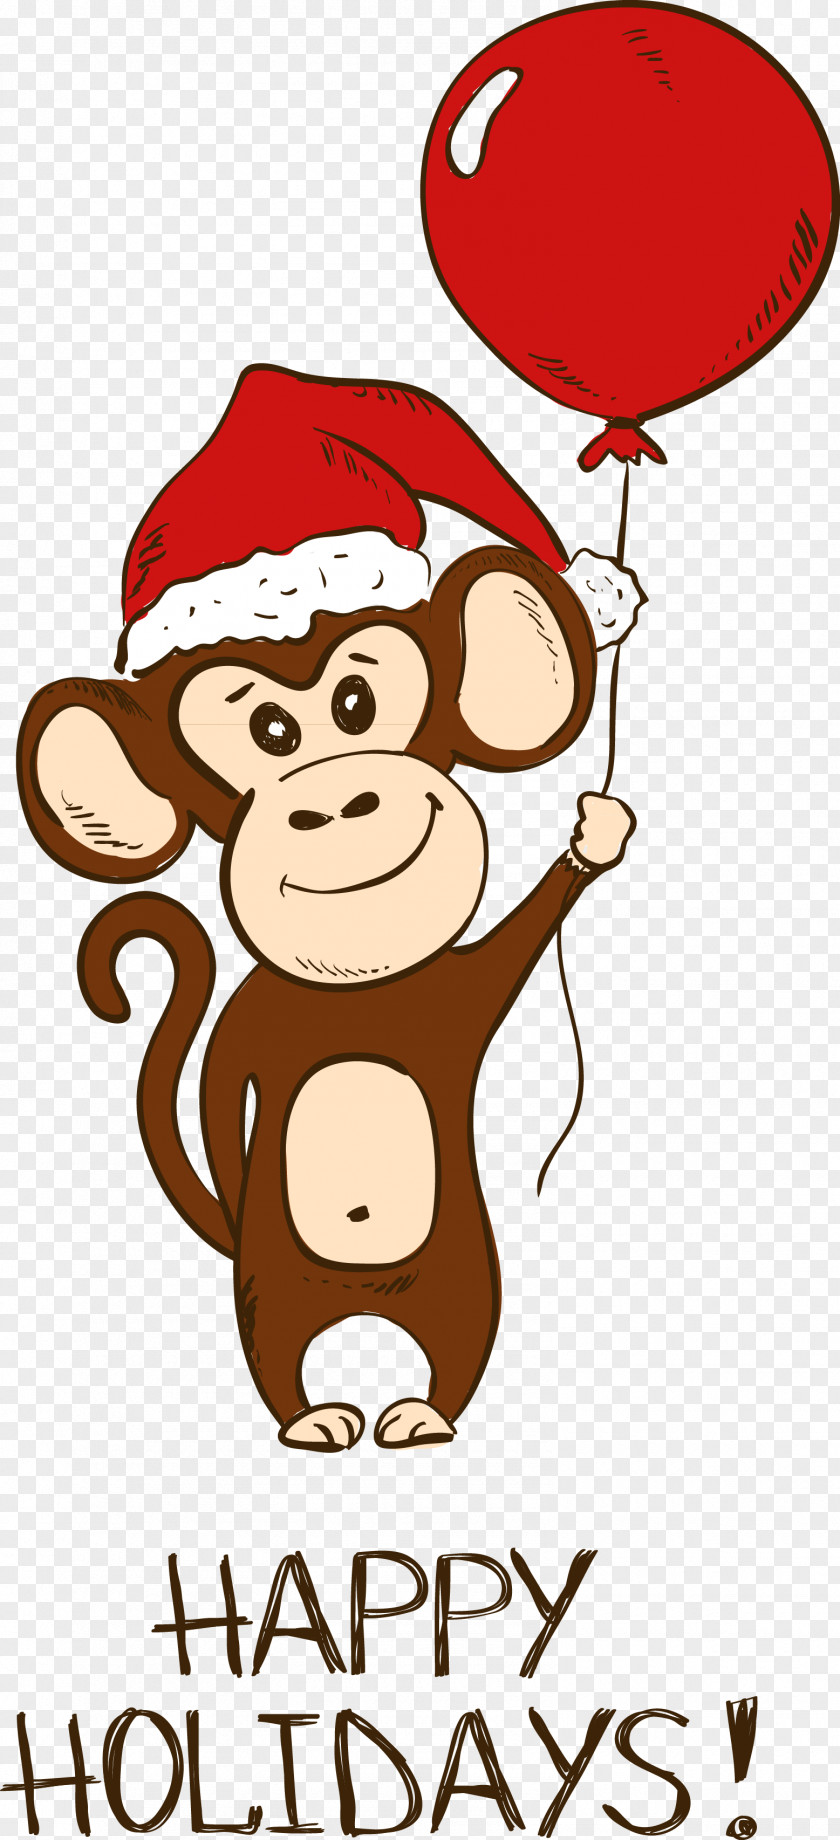 Take A Balloon Monkey Santa Claus Christmas Cartoon PNG